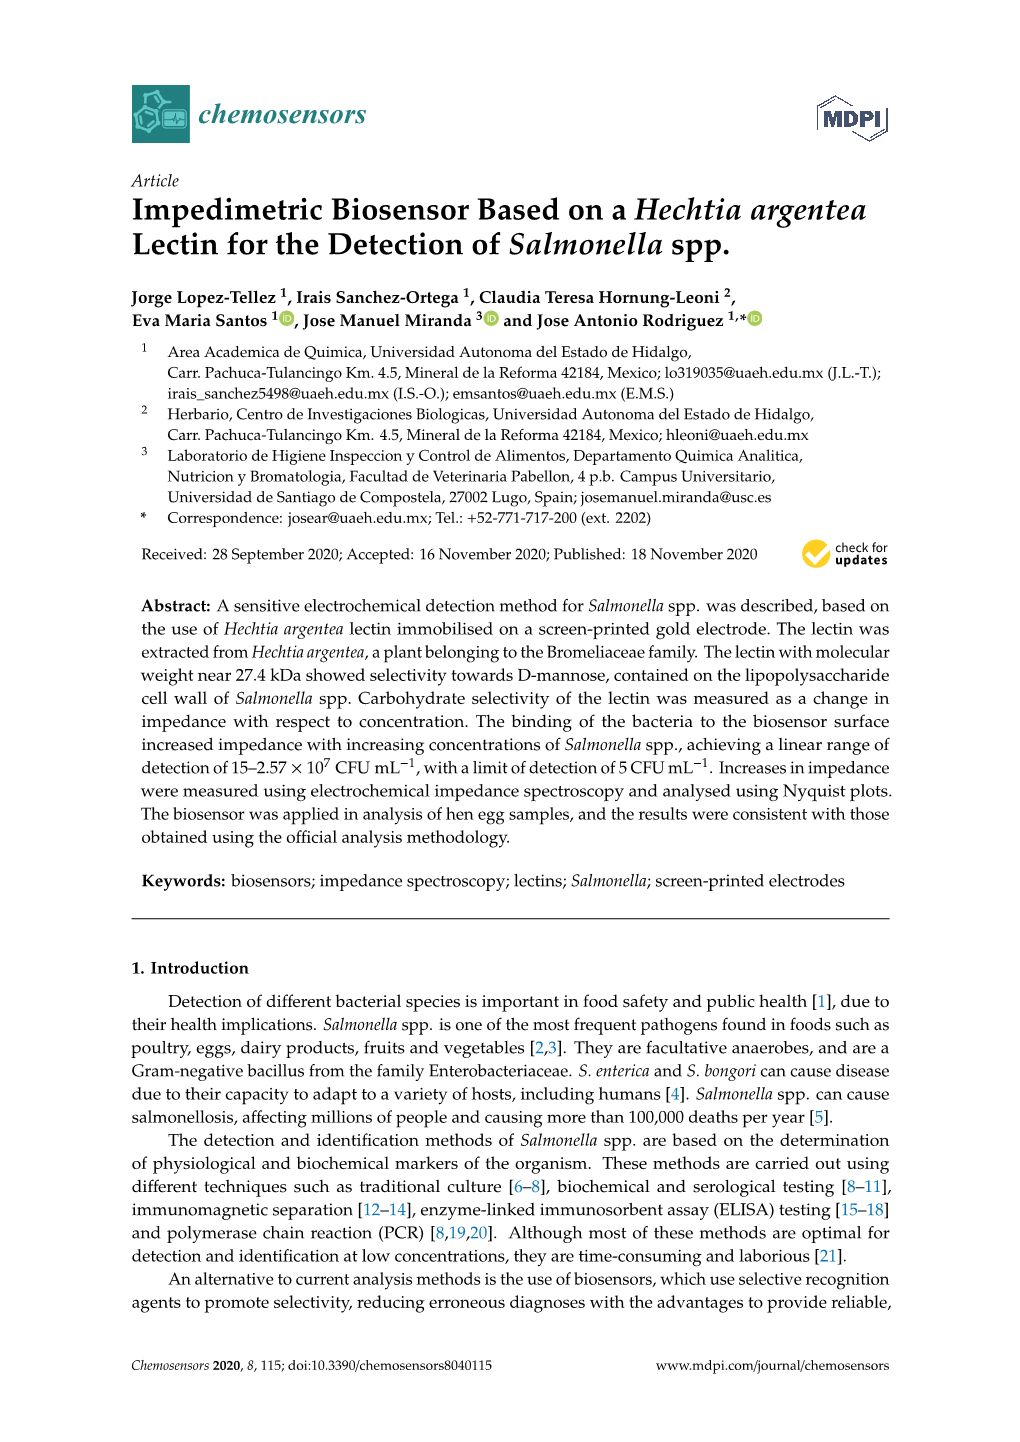 Impedimetric Biosensor Based on a Hechtia Argentea Lectin for the Detection of Salmonella Spp